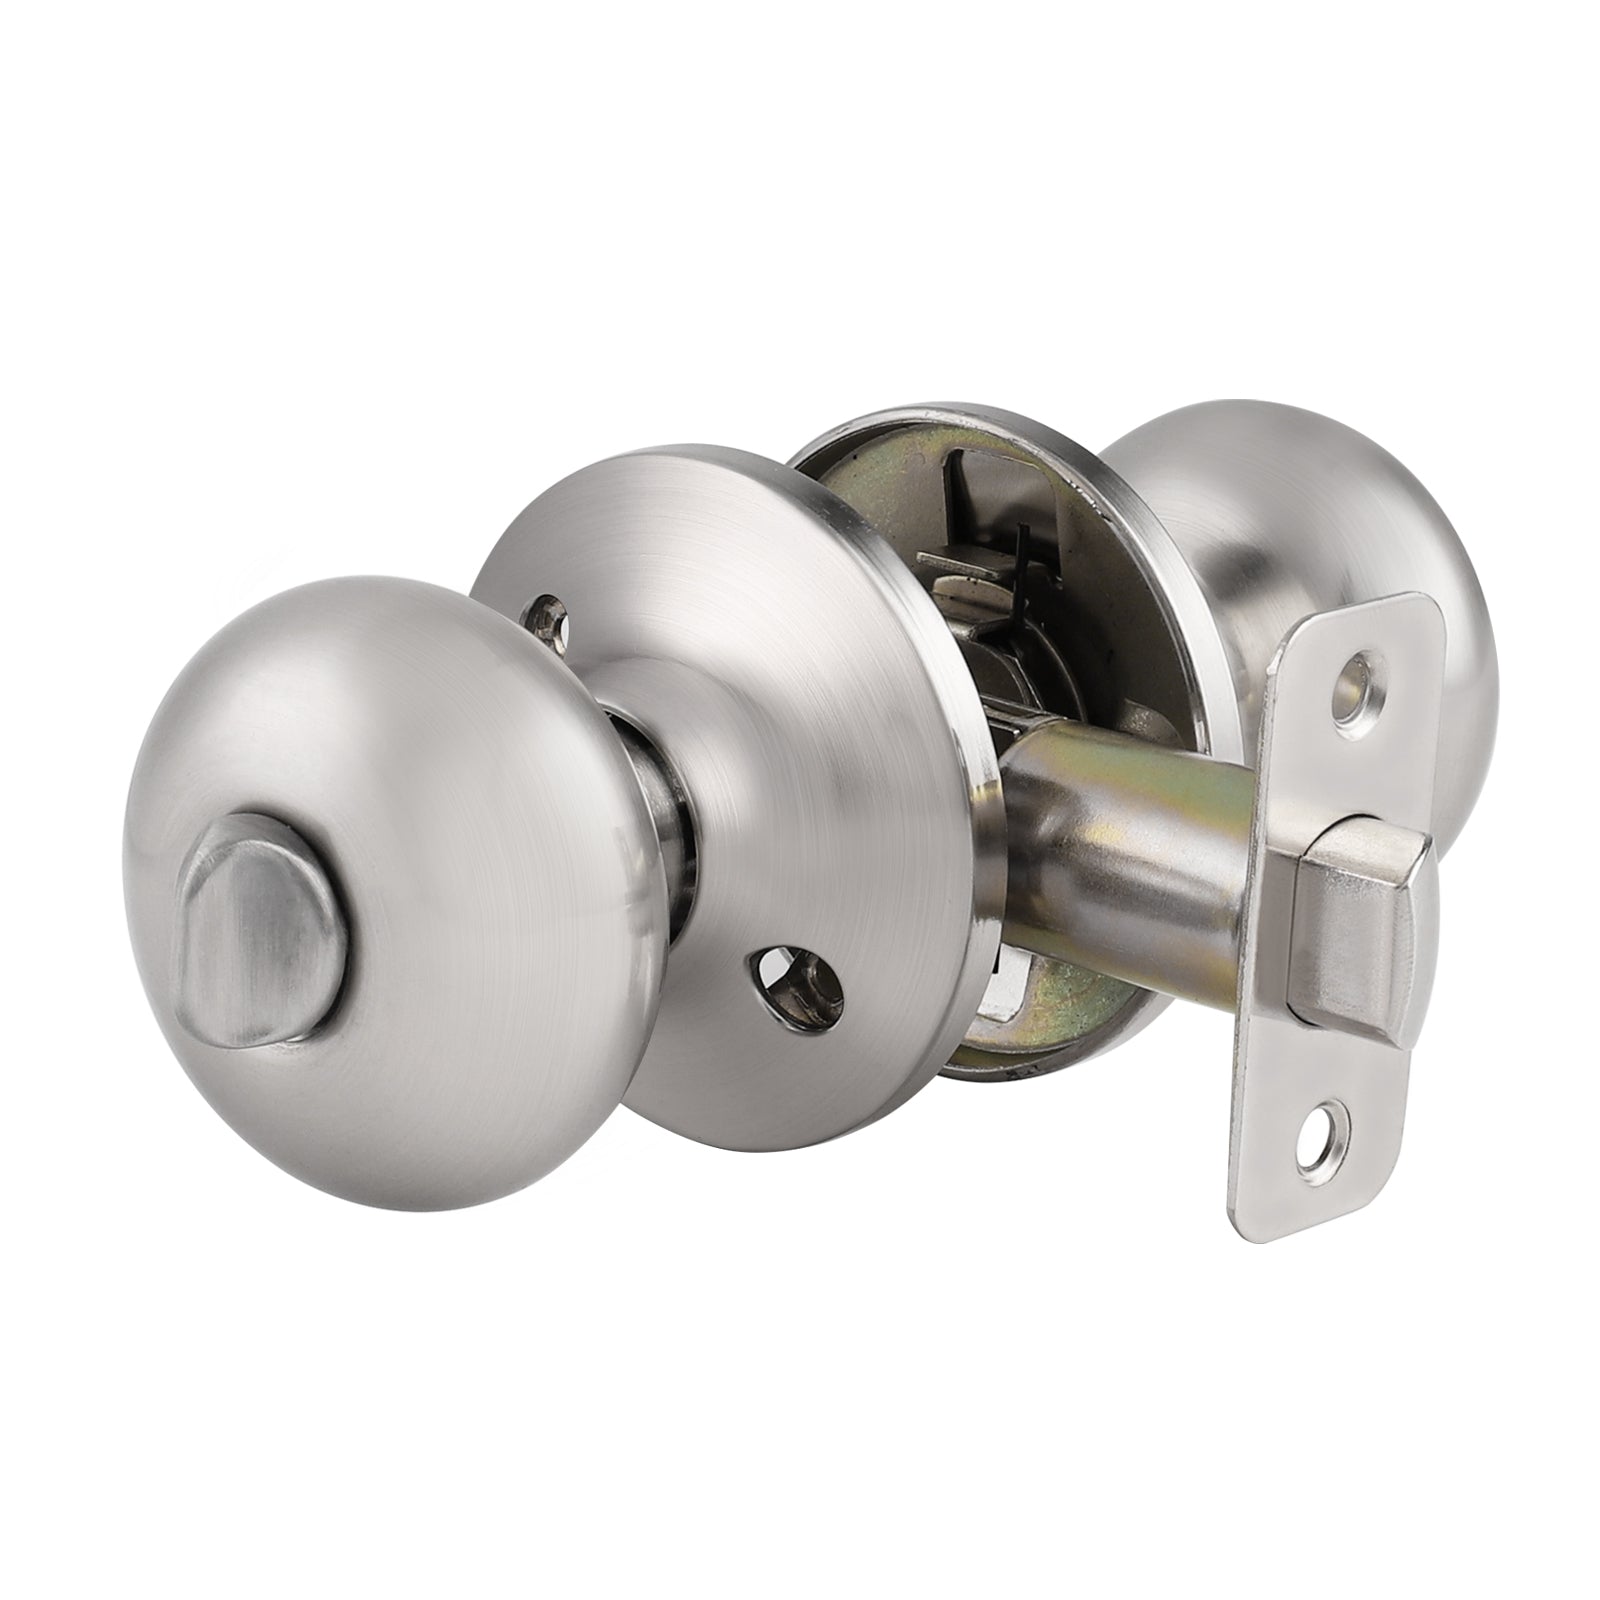 Gobrico Brushed Nickel Round Door Knobs for Bedroom Bathroom,Stainless  Steel Privacy Door Locks Interior Door Handles,Thumb-Turn Locking Inside,5  Pack